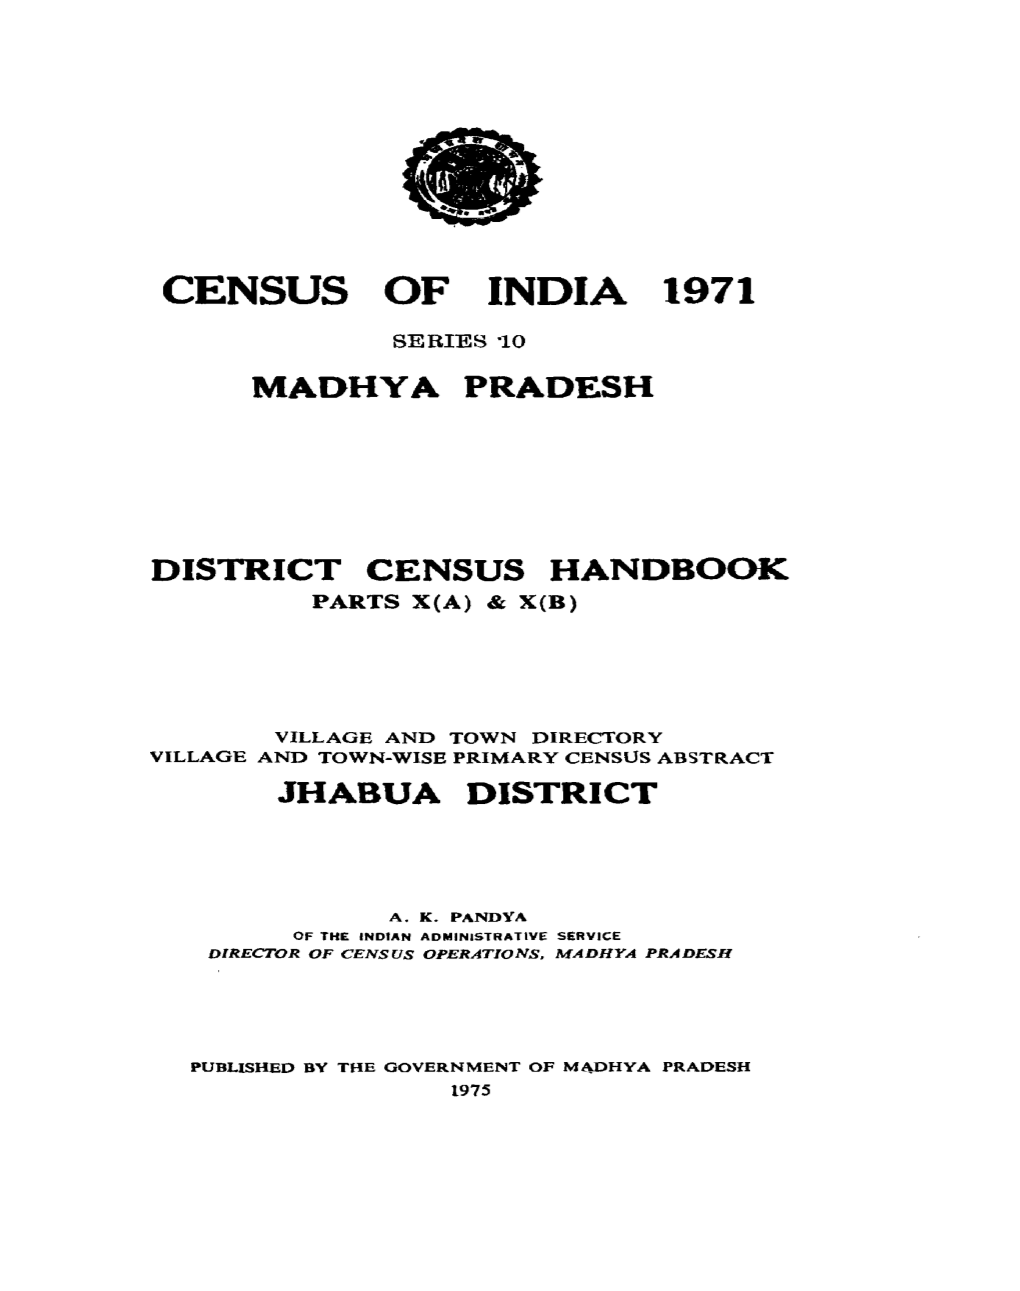 District Census Handbook, Jhabua, Part X(A) & X(B), Series-10